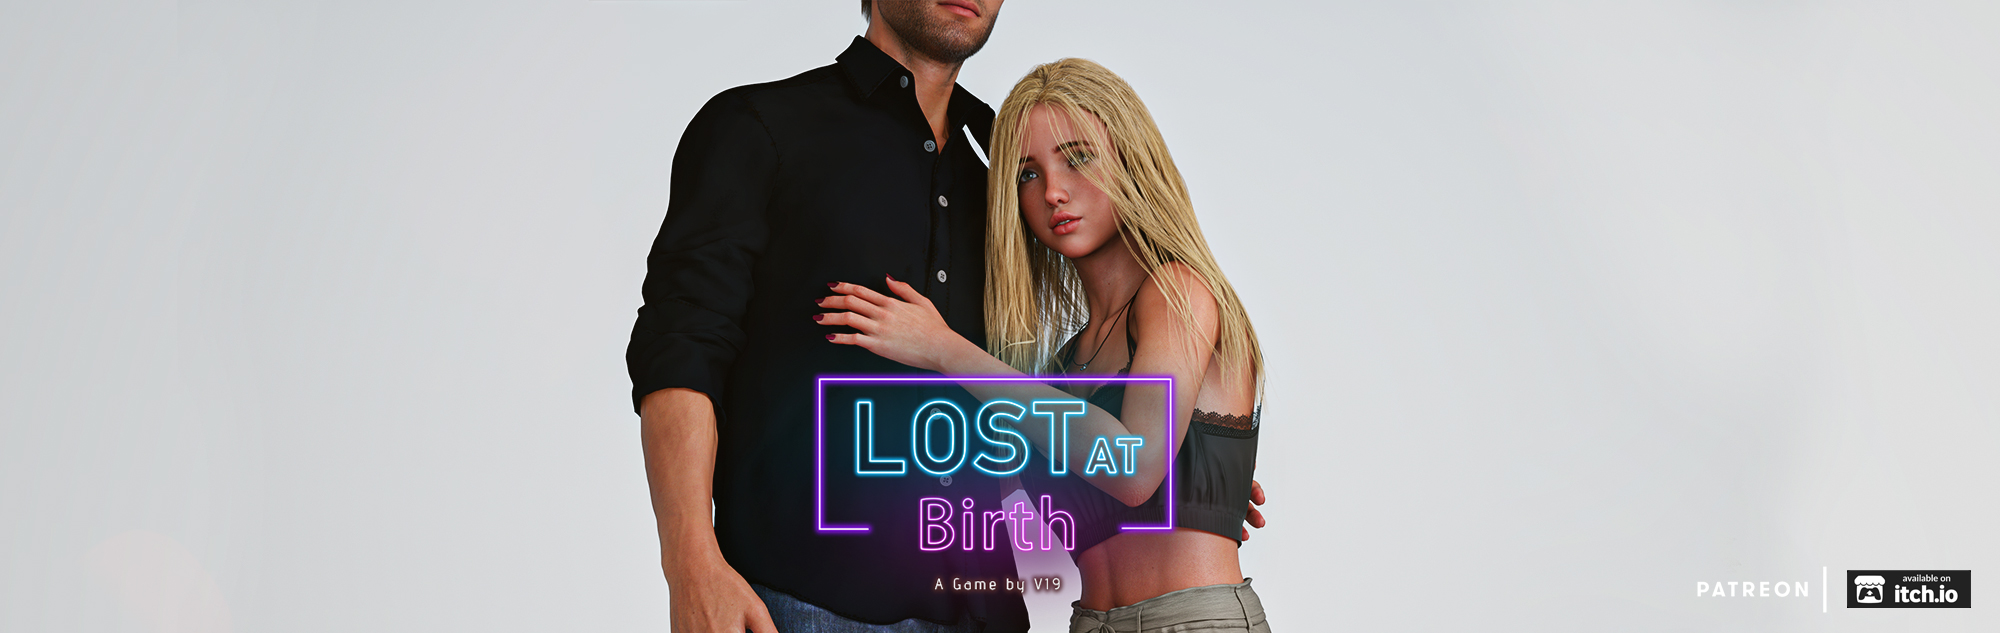 Lost at Birth1.jpg